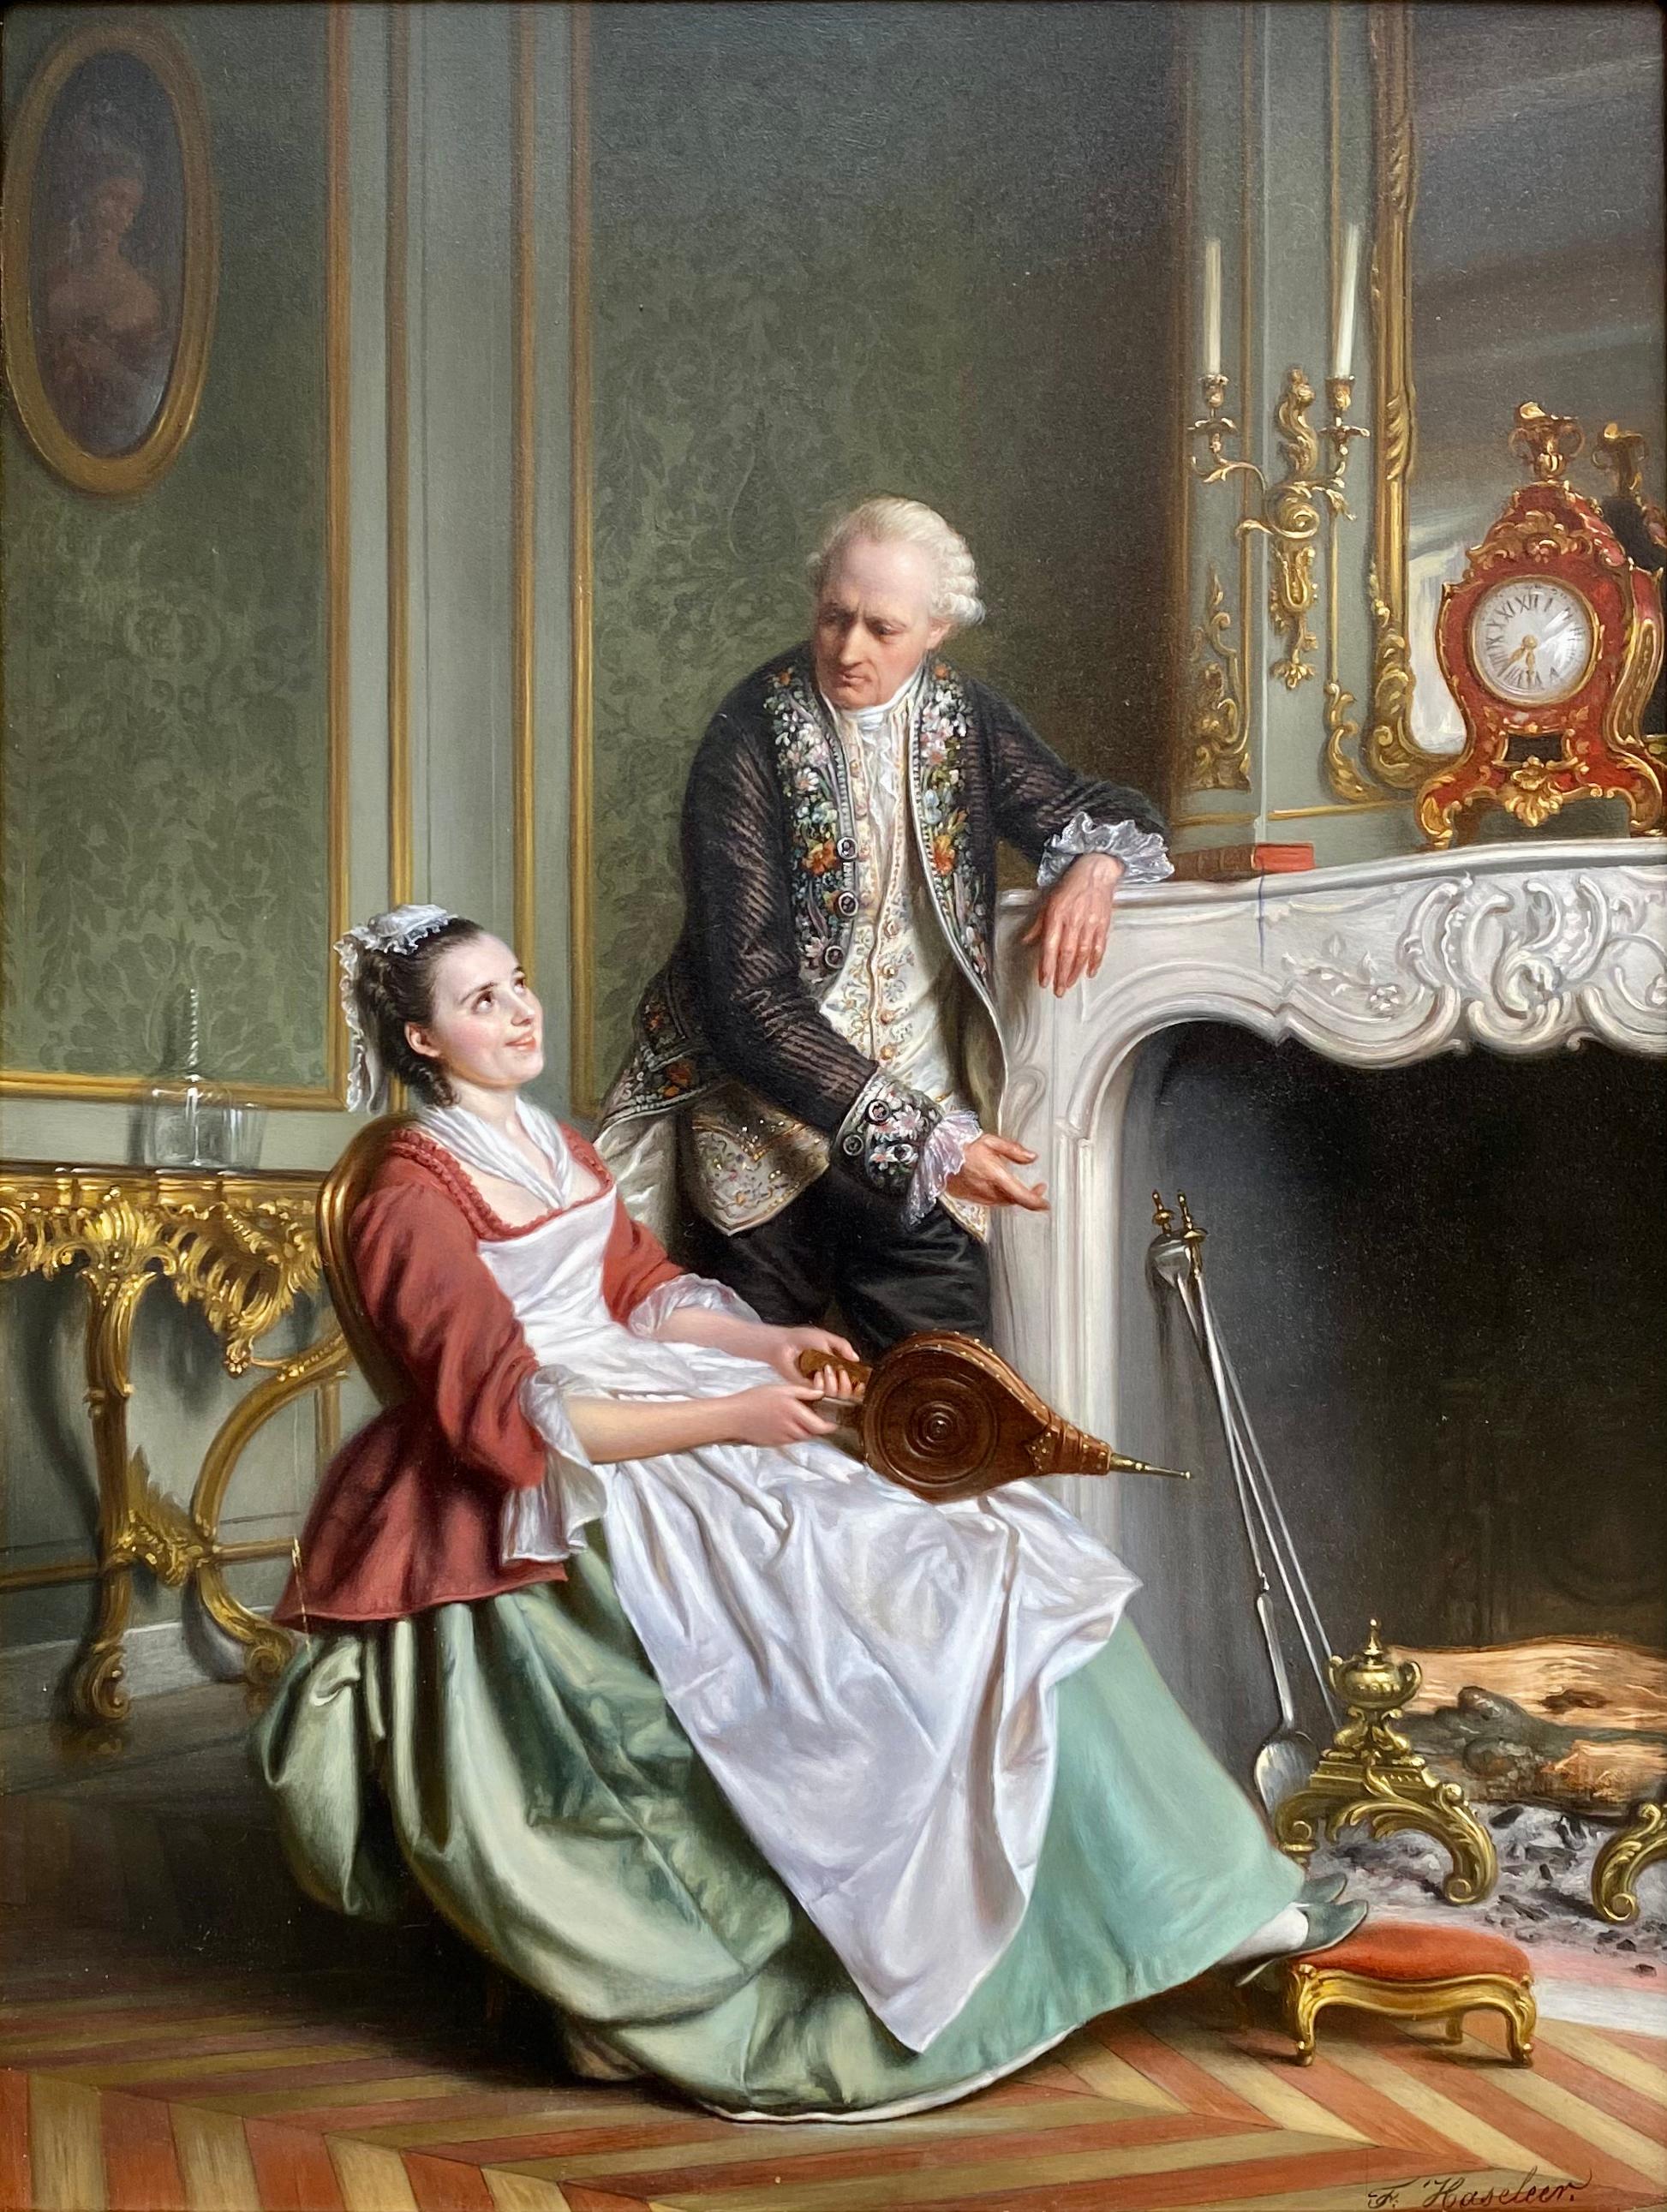 François Joseph Haseleer, Brussels 1804 – 1890, Belgian Painter, 'The Fireplace' 1